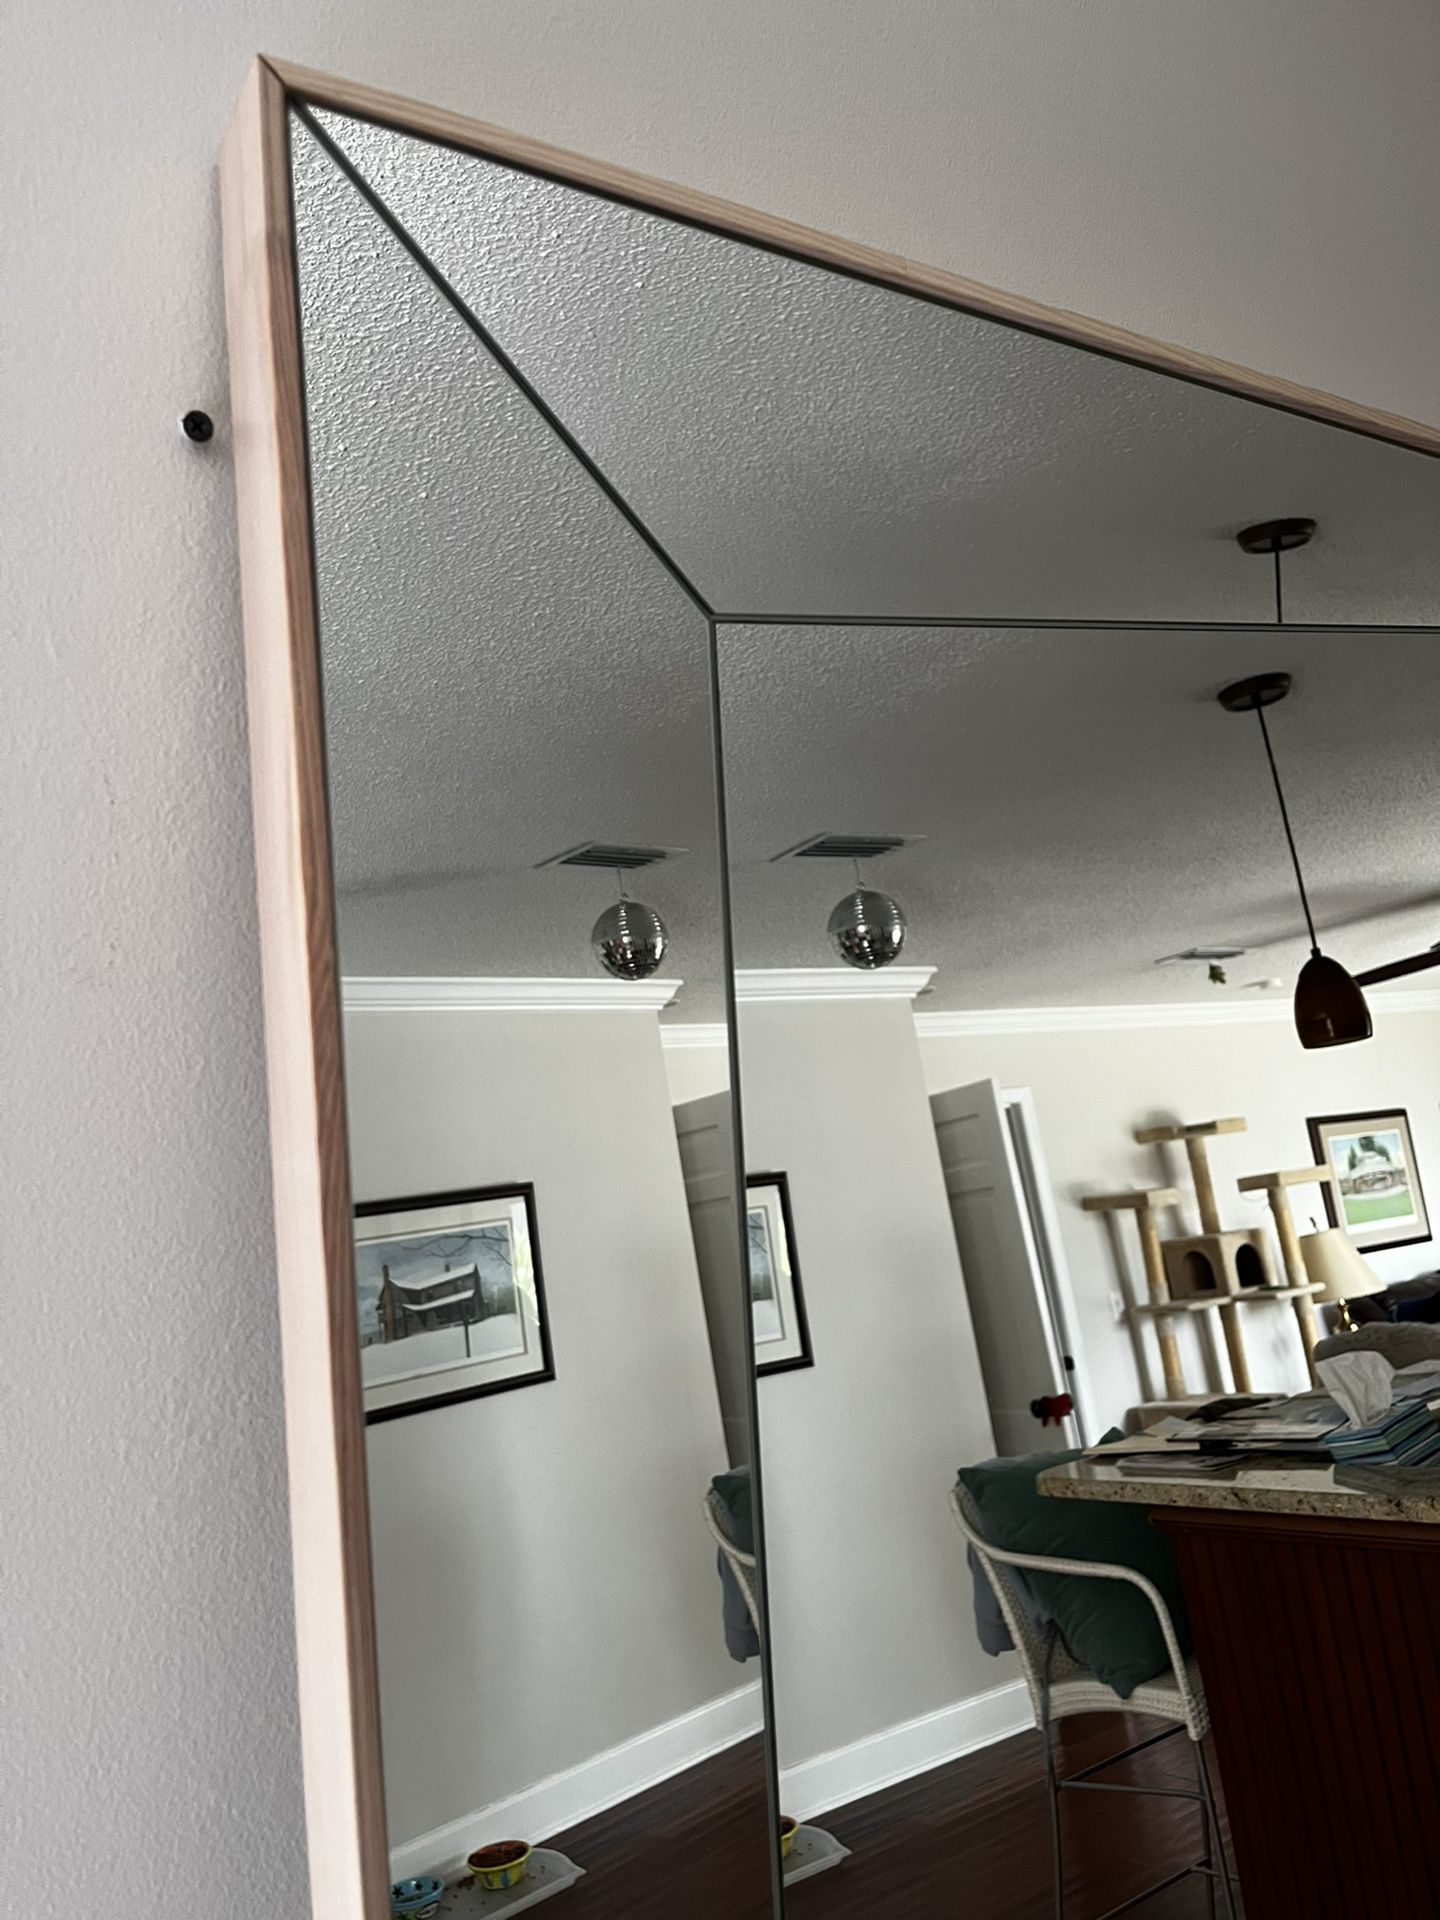 An Ikea Abloh, design by Virgil Abloh distortion mirror 76.5 x 187cm